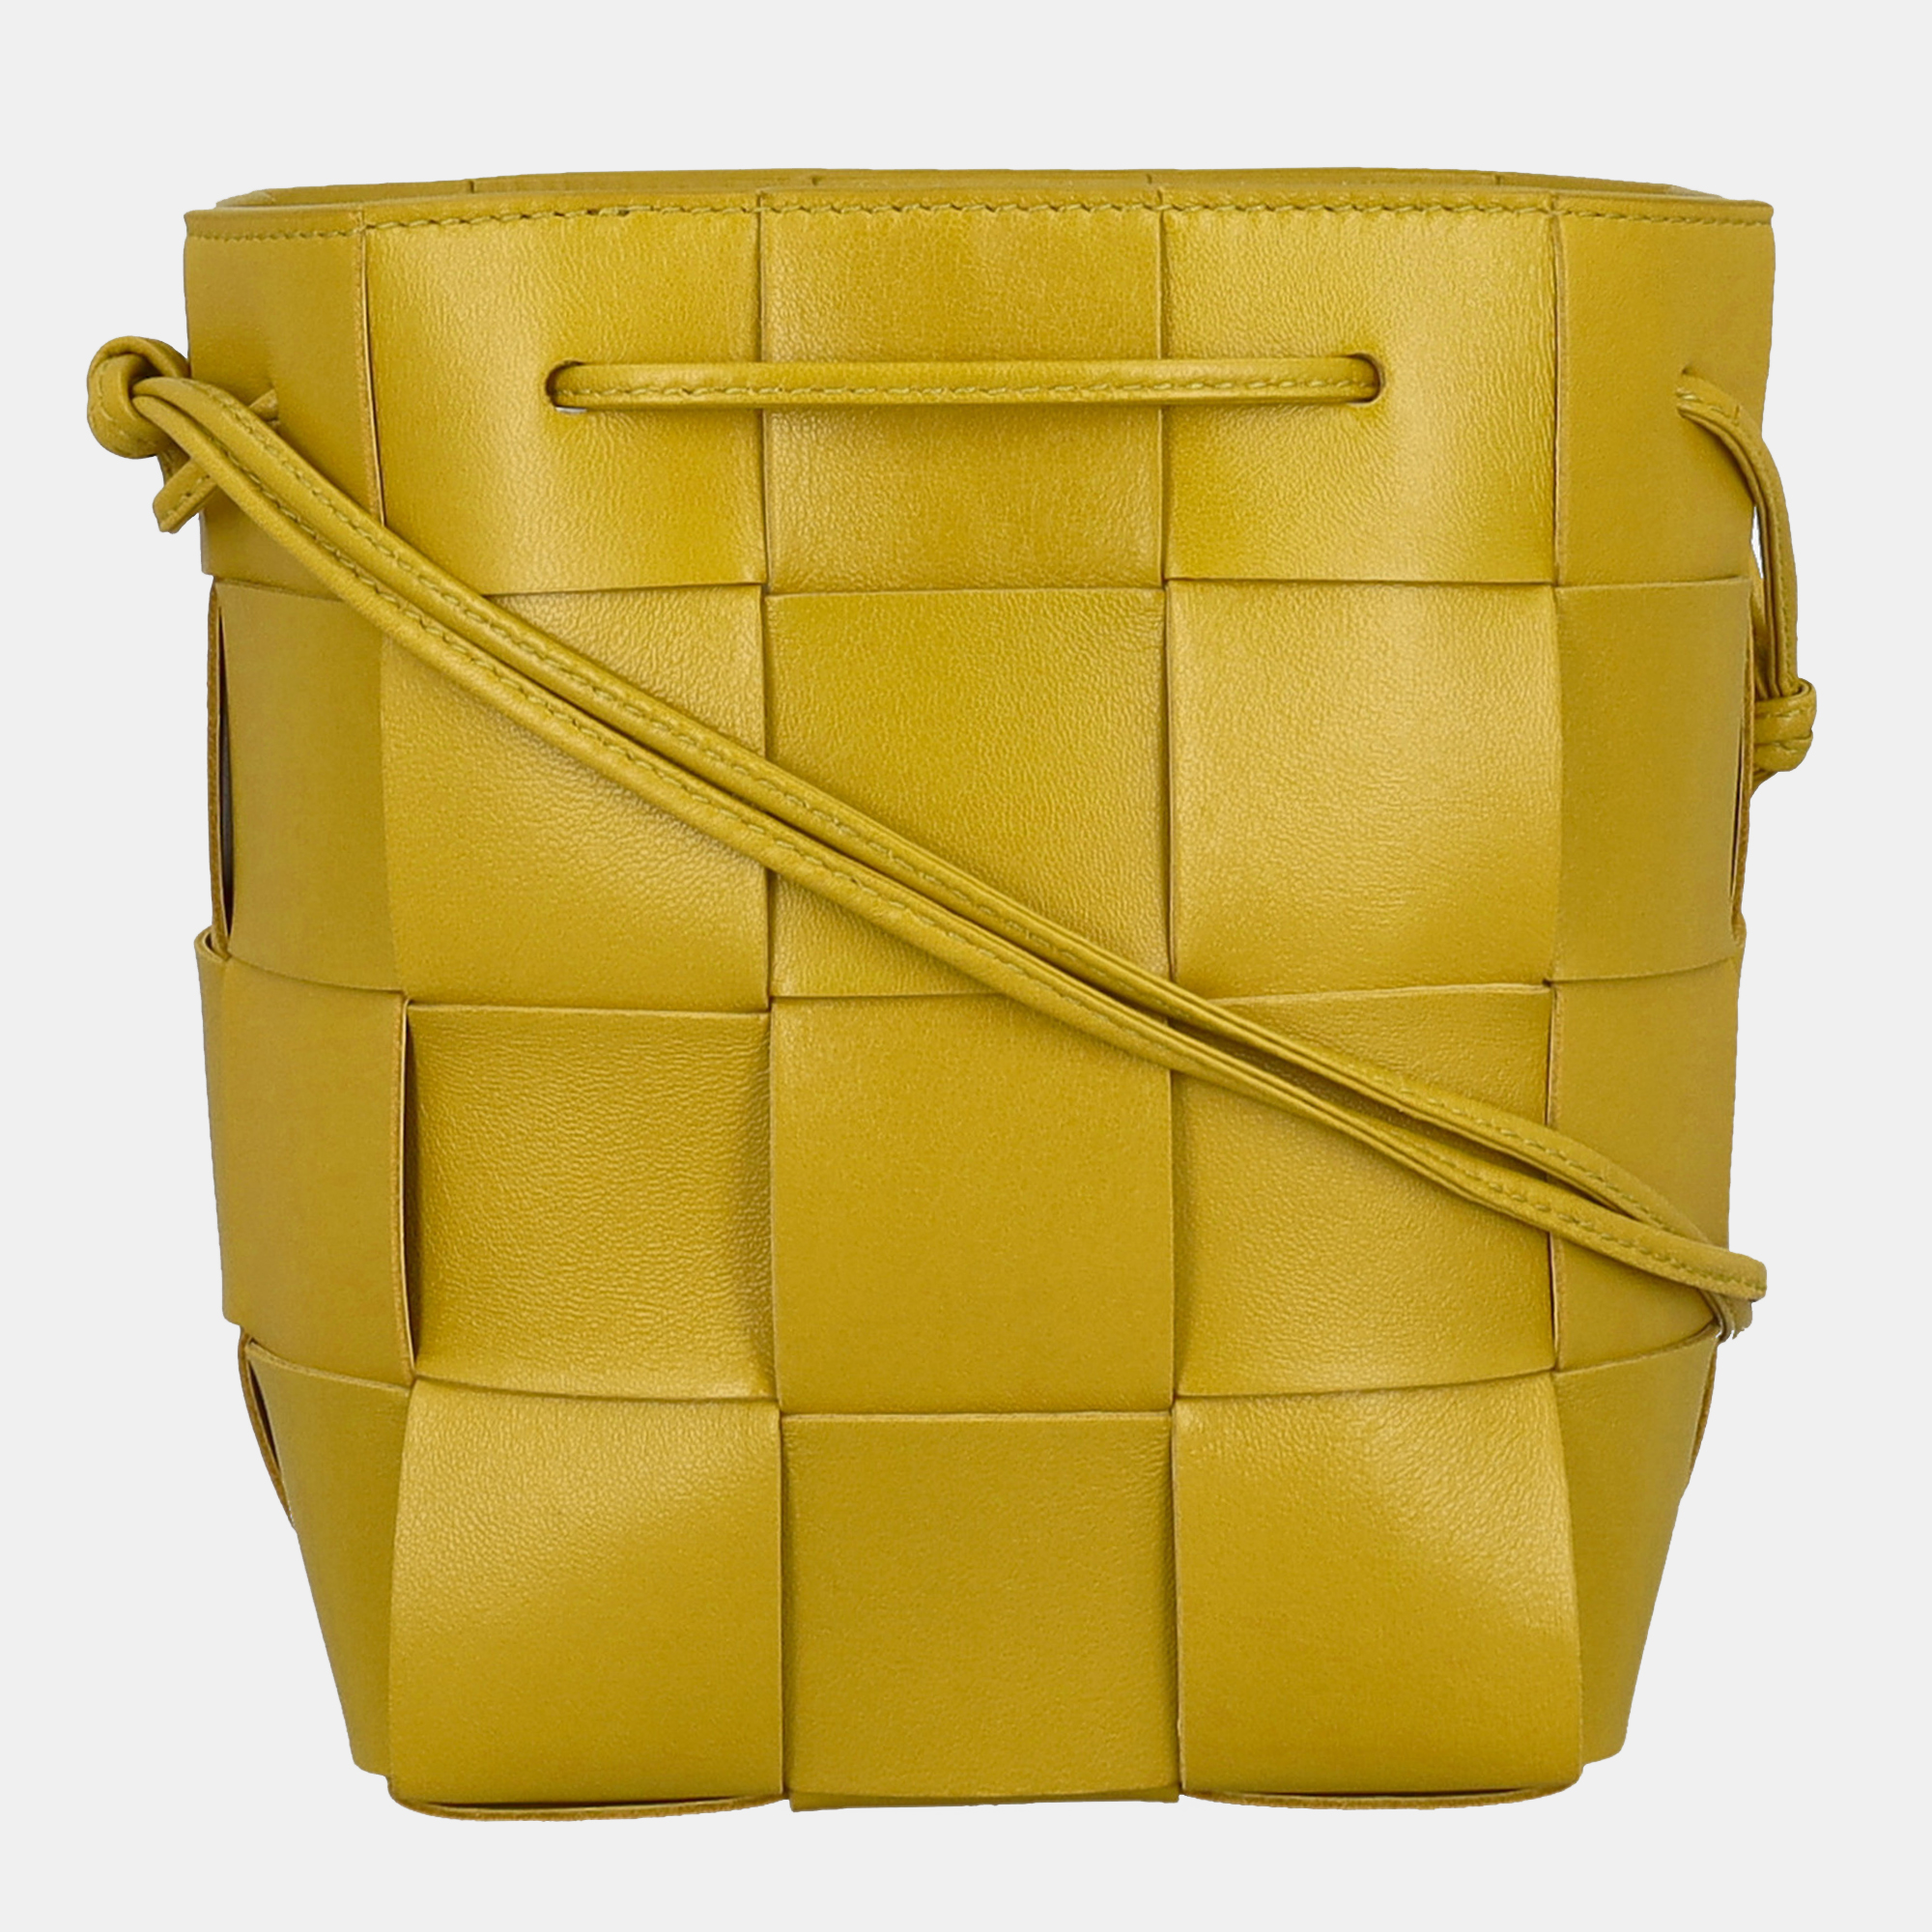 Bottega Veneta  Women's Leather Cross Body Bag - Yellow - One Size